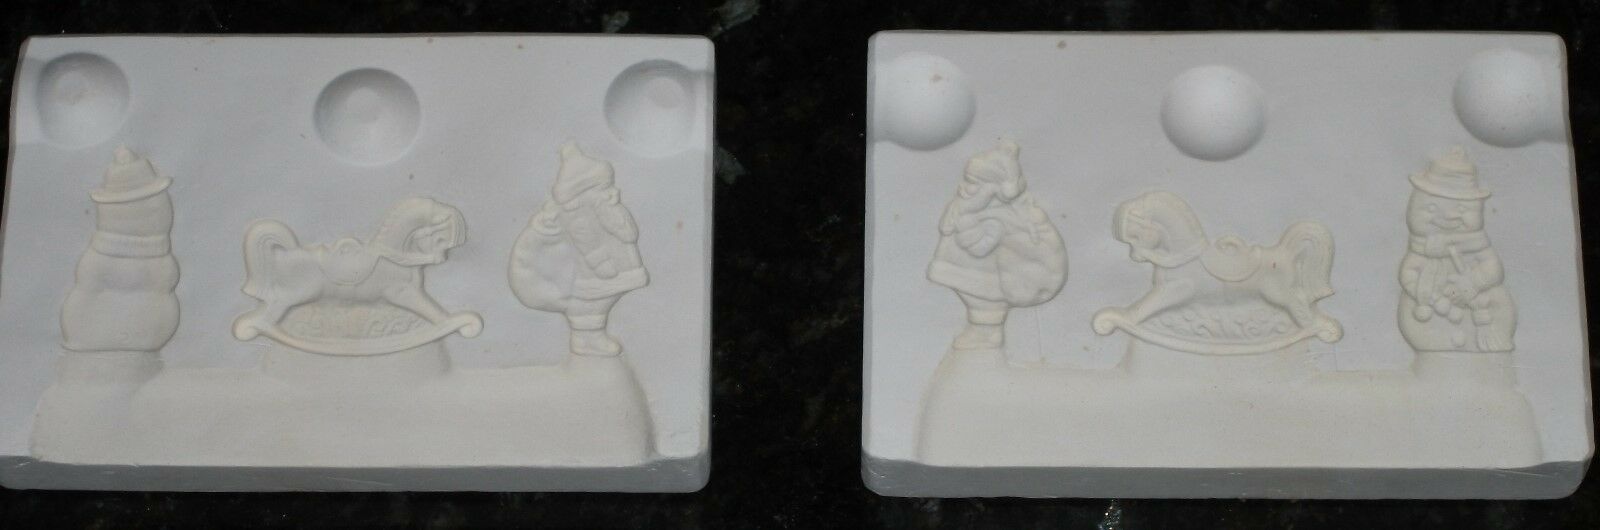 Alberta's molds for ceramic castings - #A-143 - Santa, Rocking Horse, Snowman